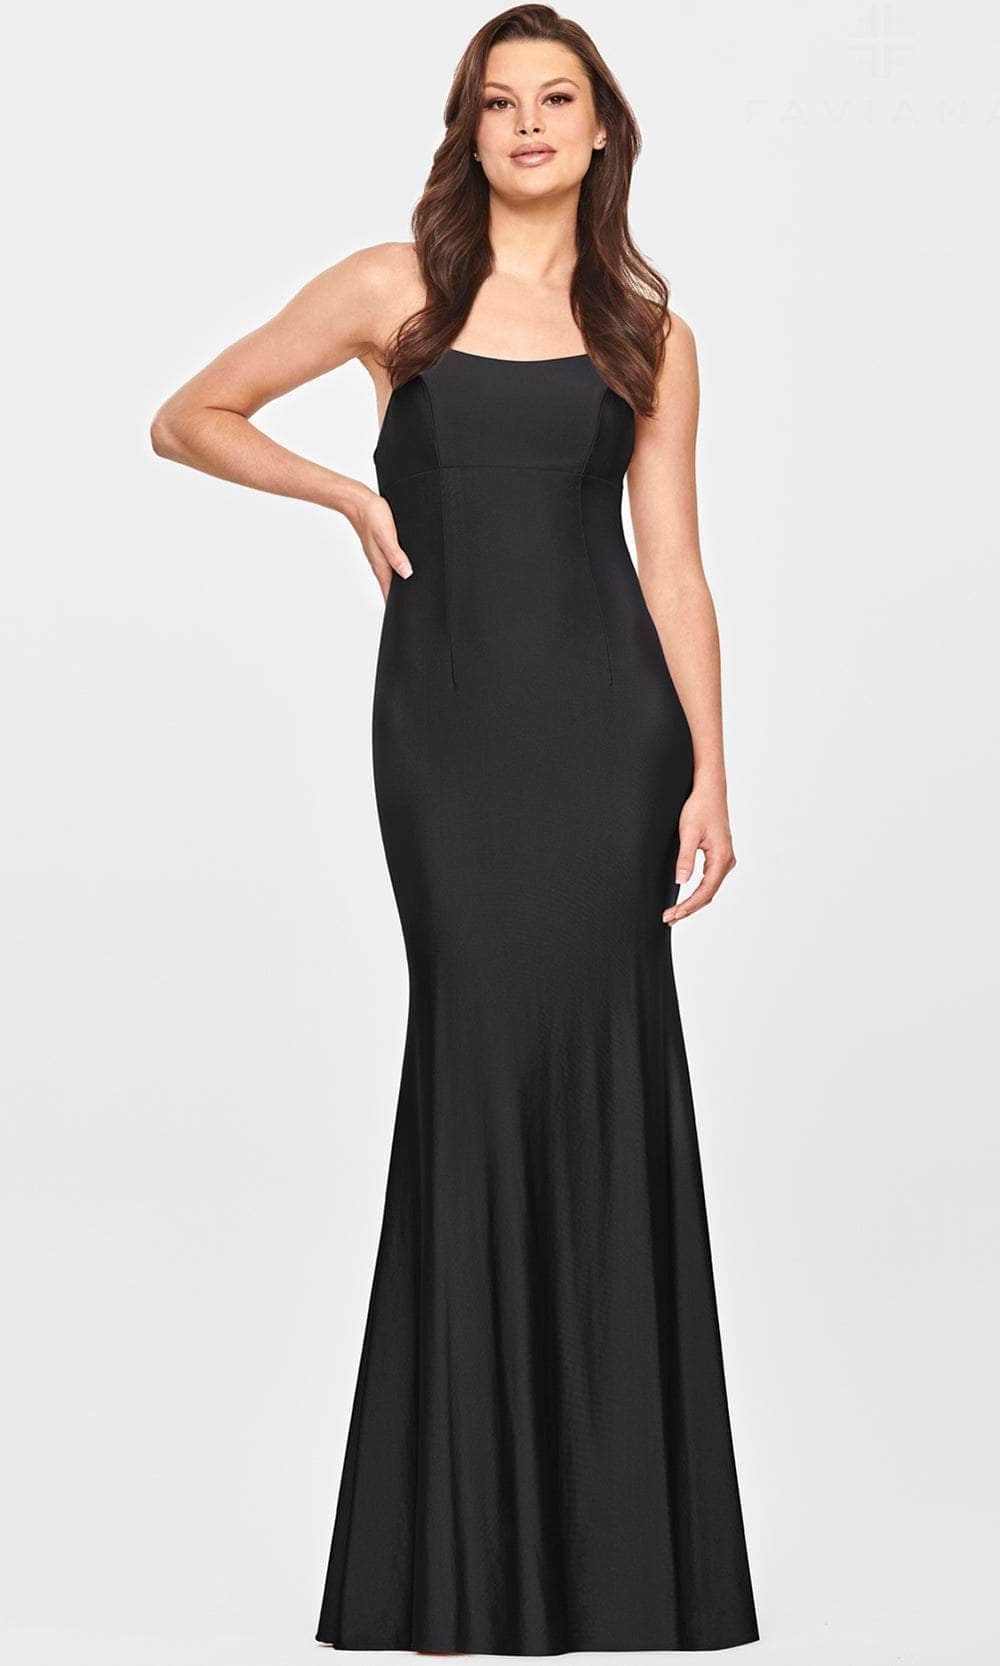 Faviana S10844 - Sleeveless Scoop Neckline Evening Dress